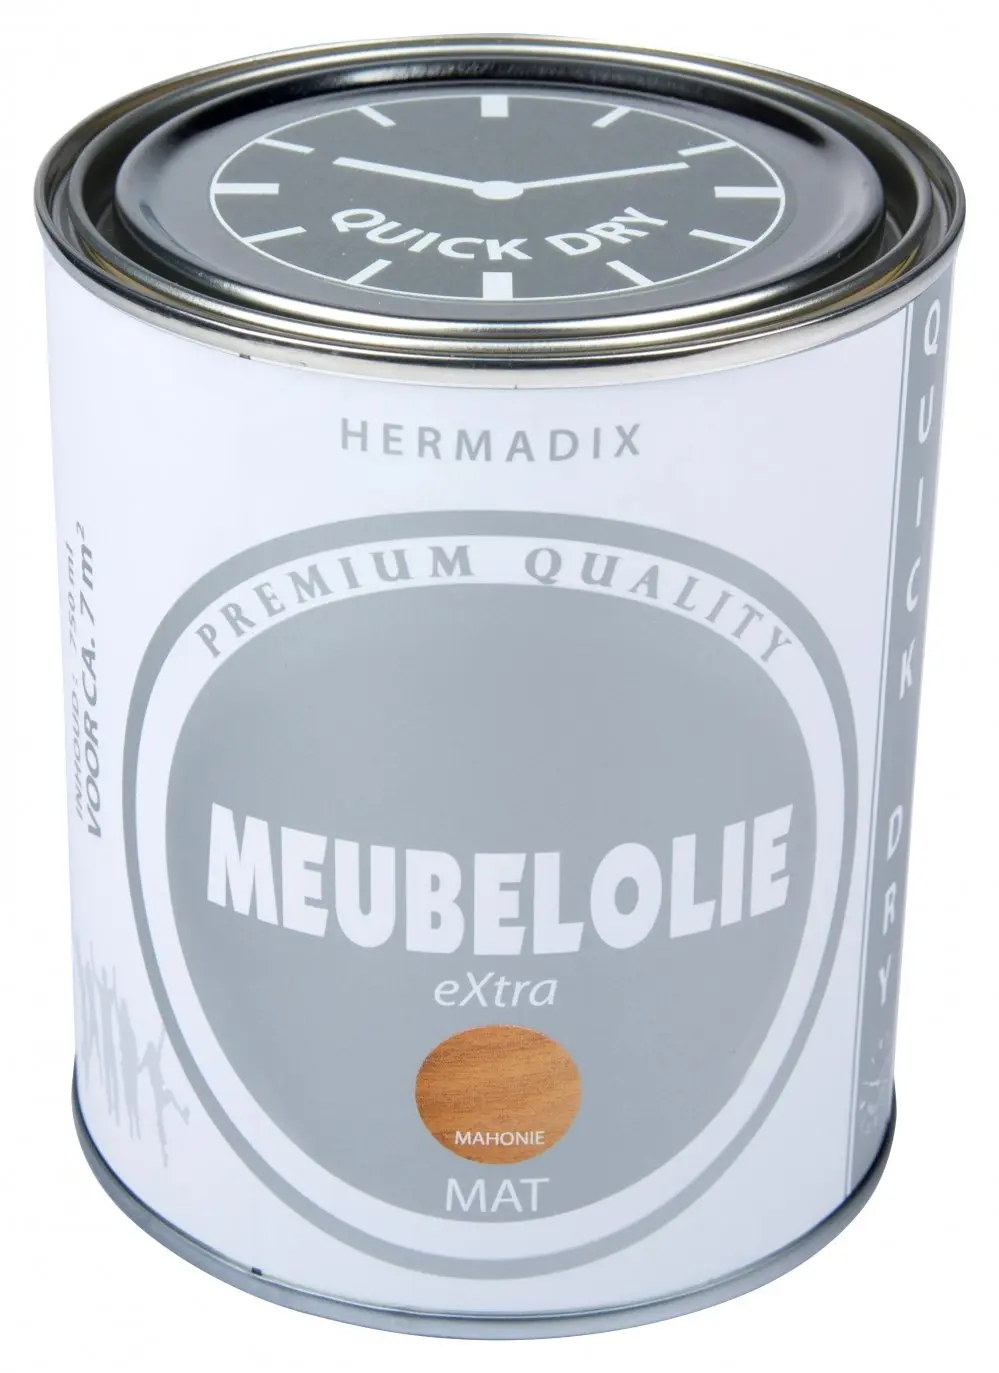 Houtolie - hermadix-meubellolie-extra-mat-mahonie1-verfcompleet.nl